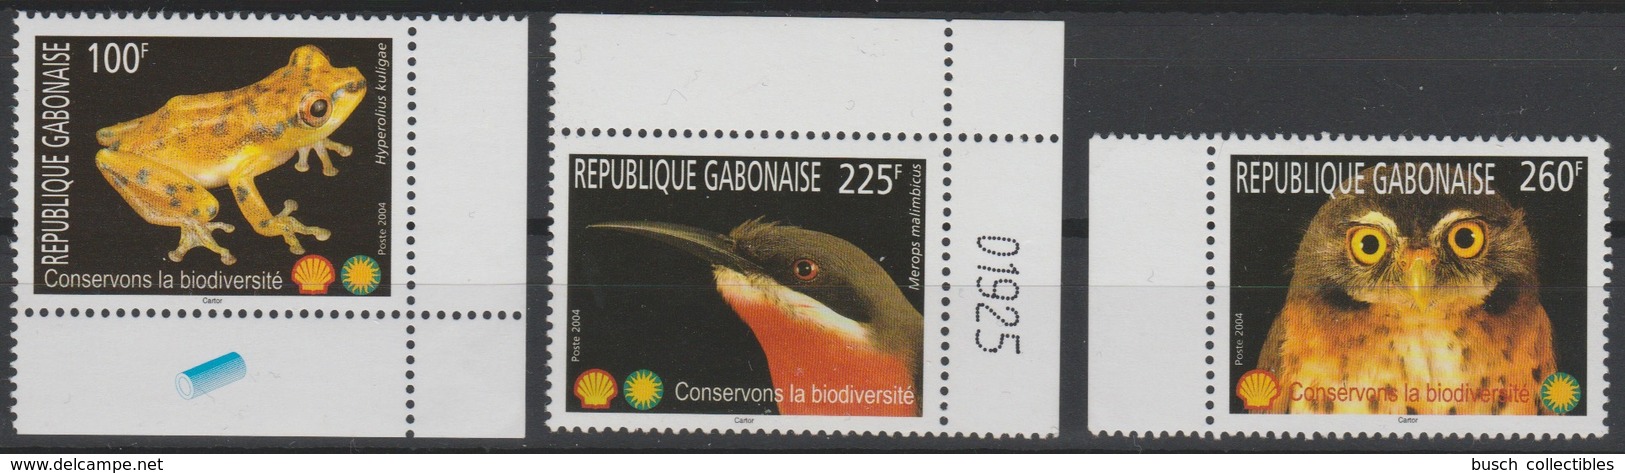 Gabon Gabun 2004 Mi. 1673 1675 1676 Conservons La Biodiversité Faune Fauna Bird Owl Reptile ULTRA Scarce  MNH** - Eulenvögel